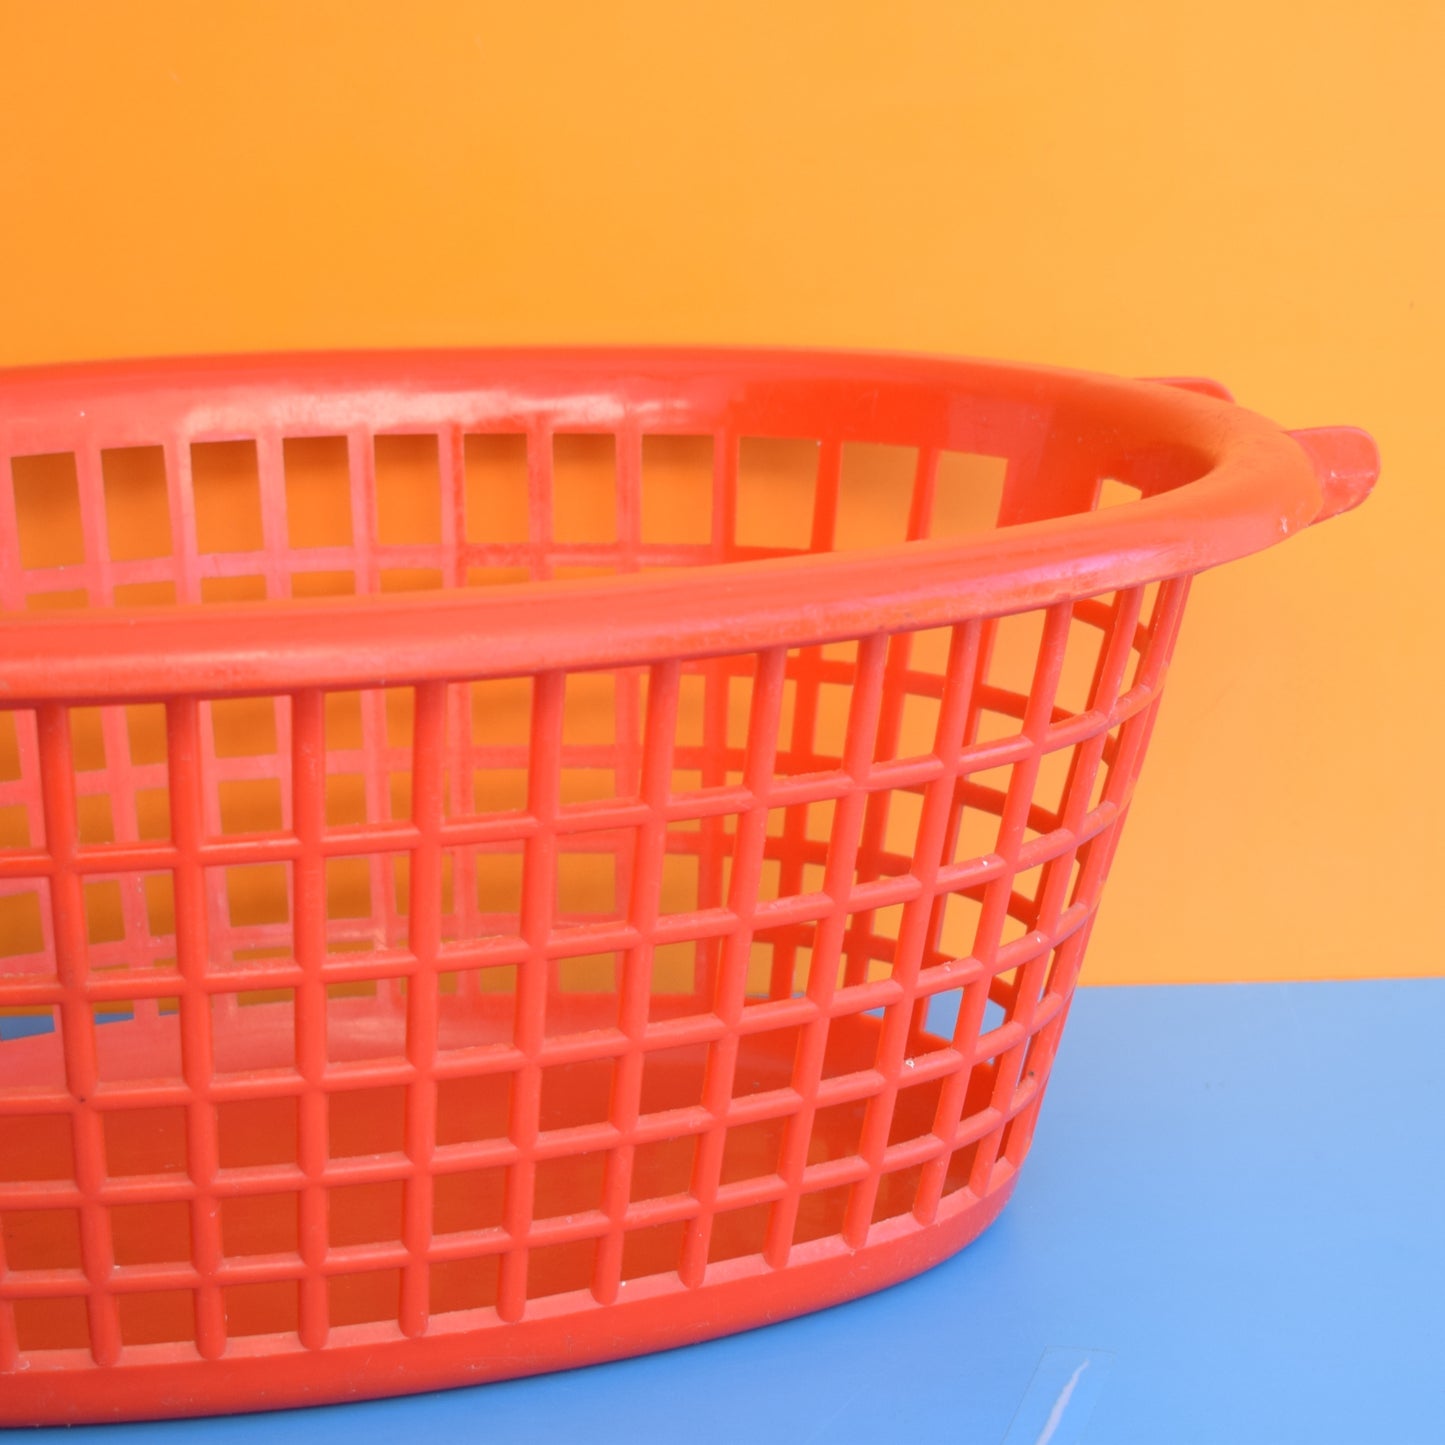 Vintage 1970s Plastic Washing Basket - Red